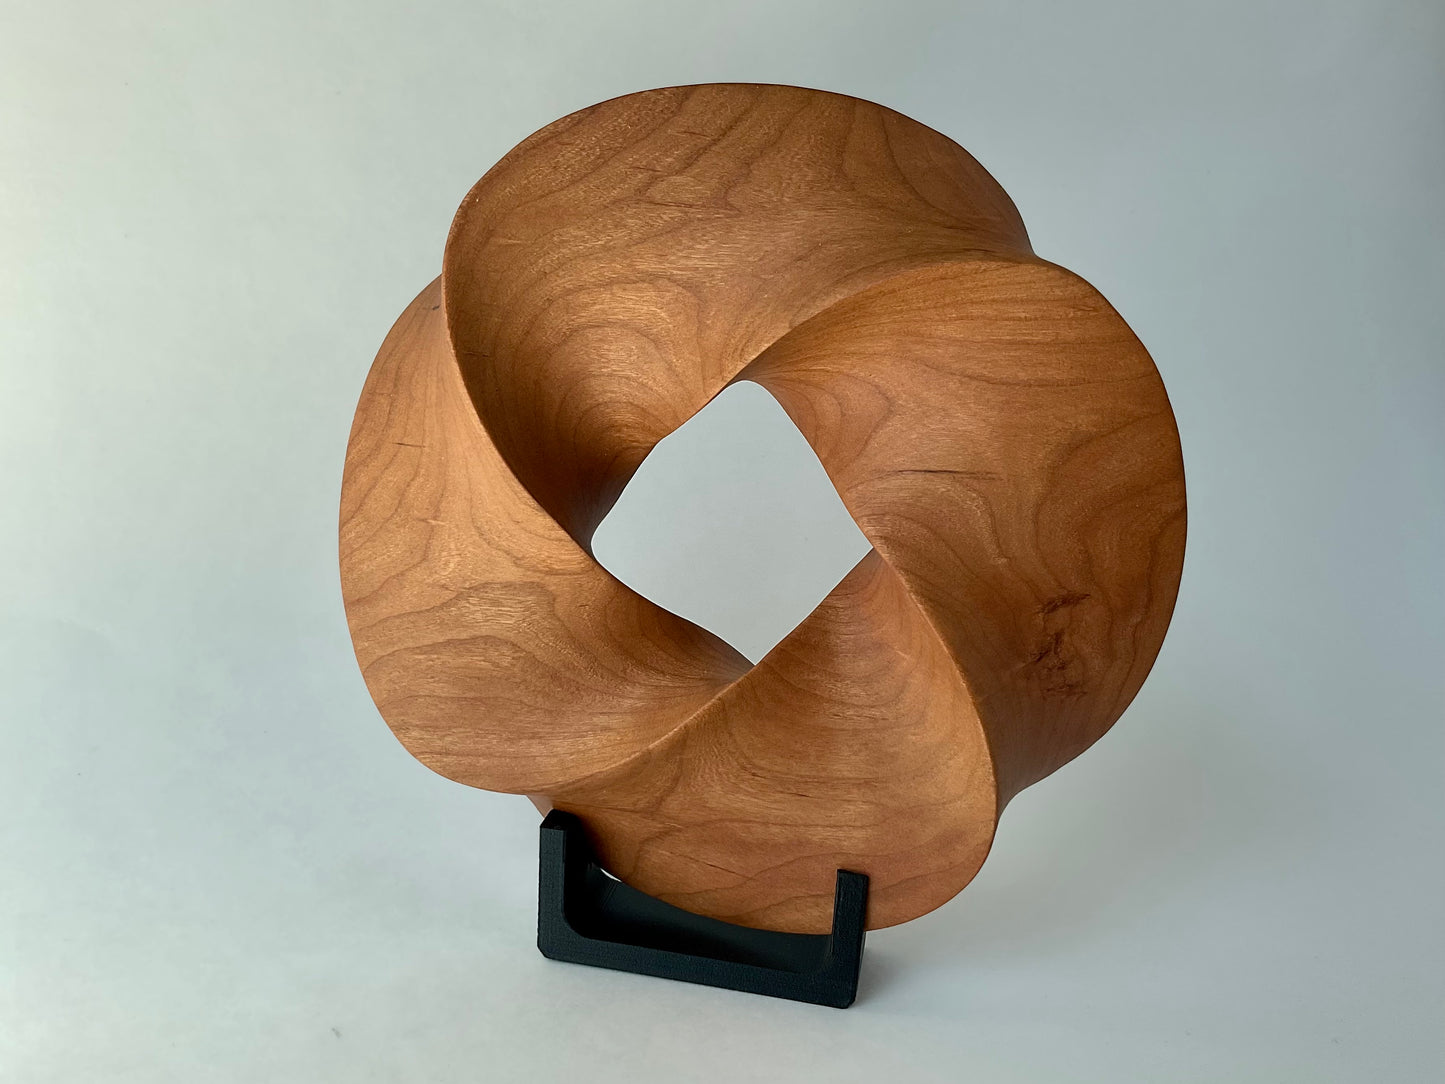 Quadruple-folded Möbius Strip-like Cherry Wood Carving, 7" diameter